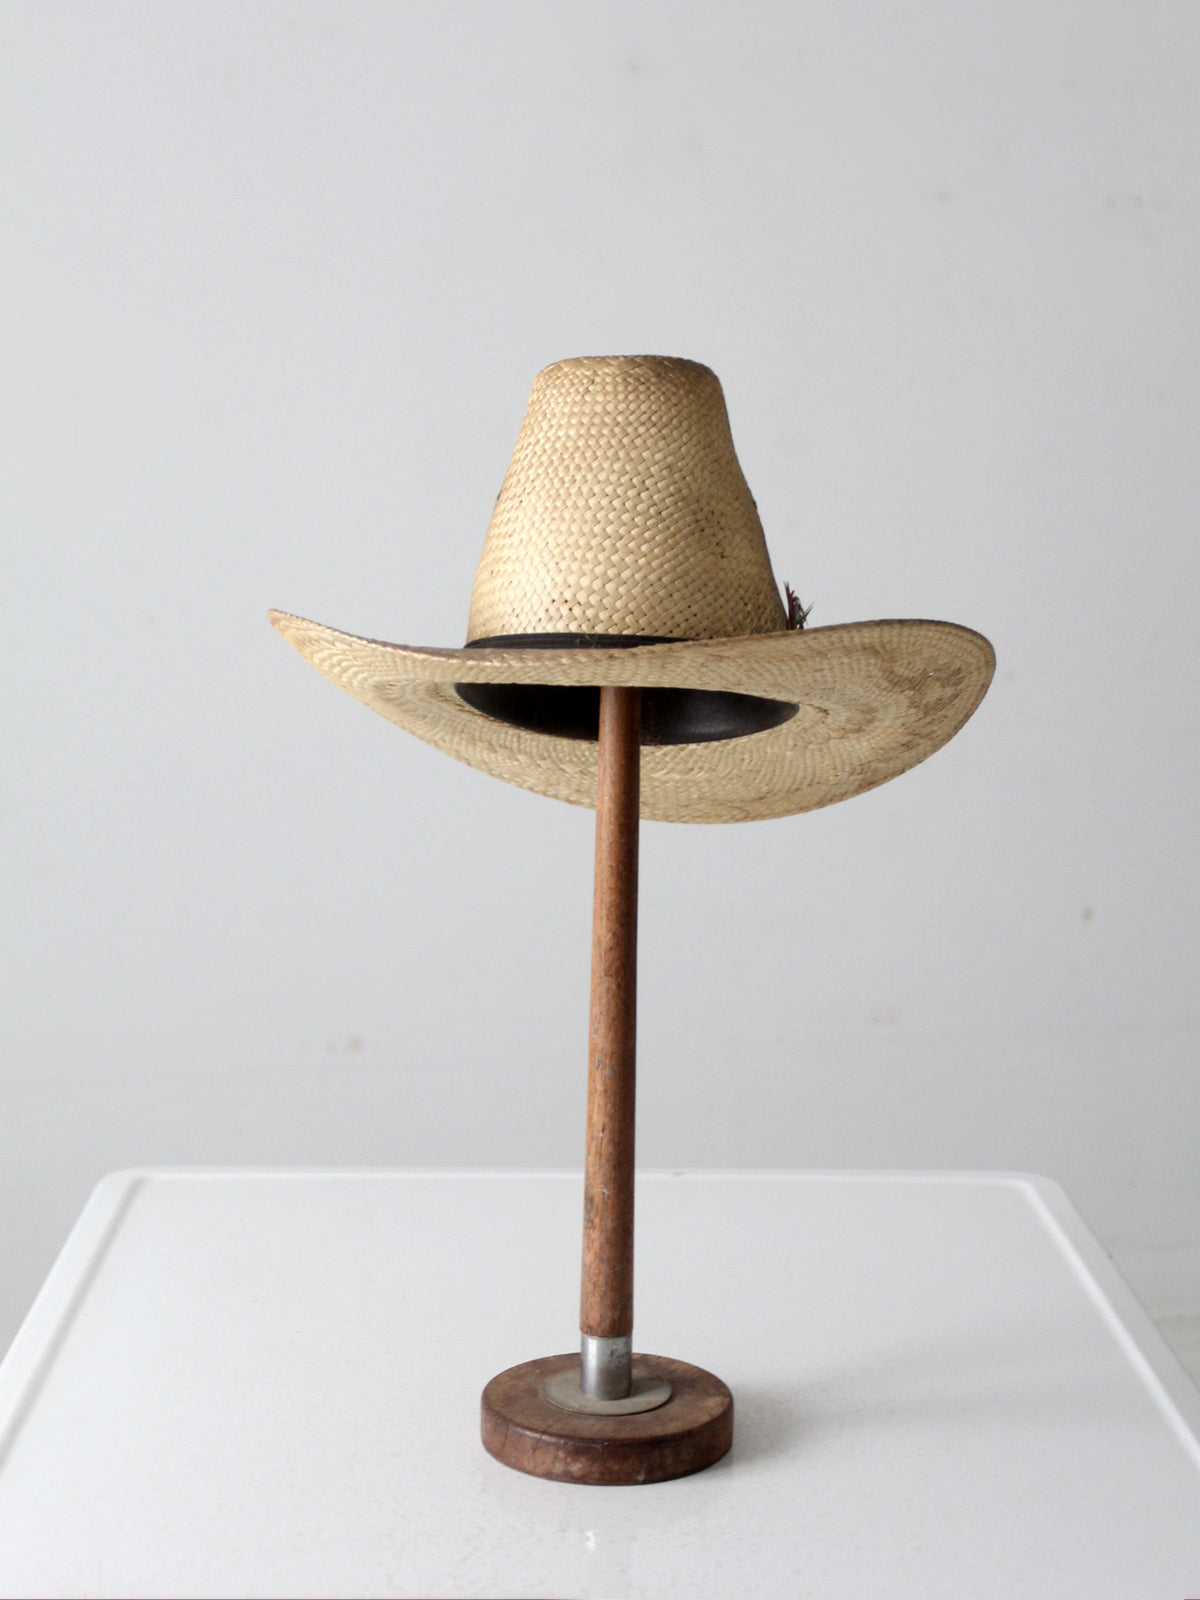 vintage Bailey woven cowboy hat